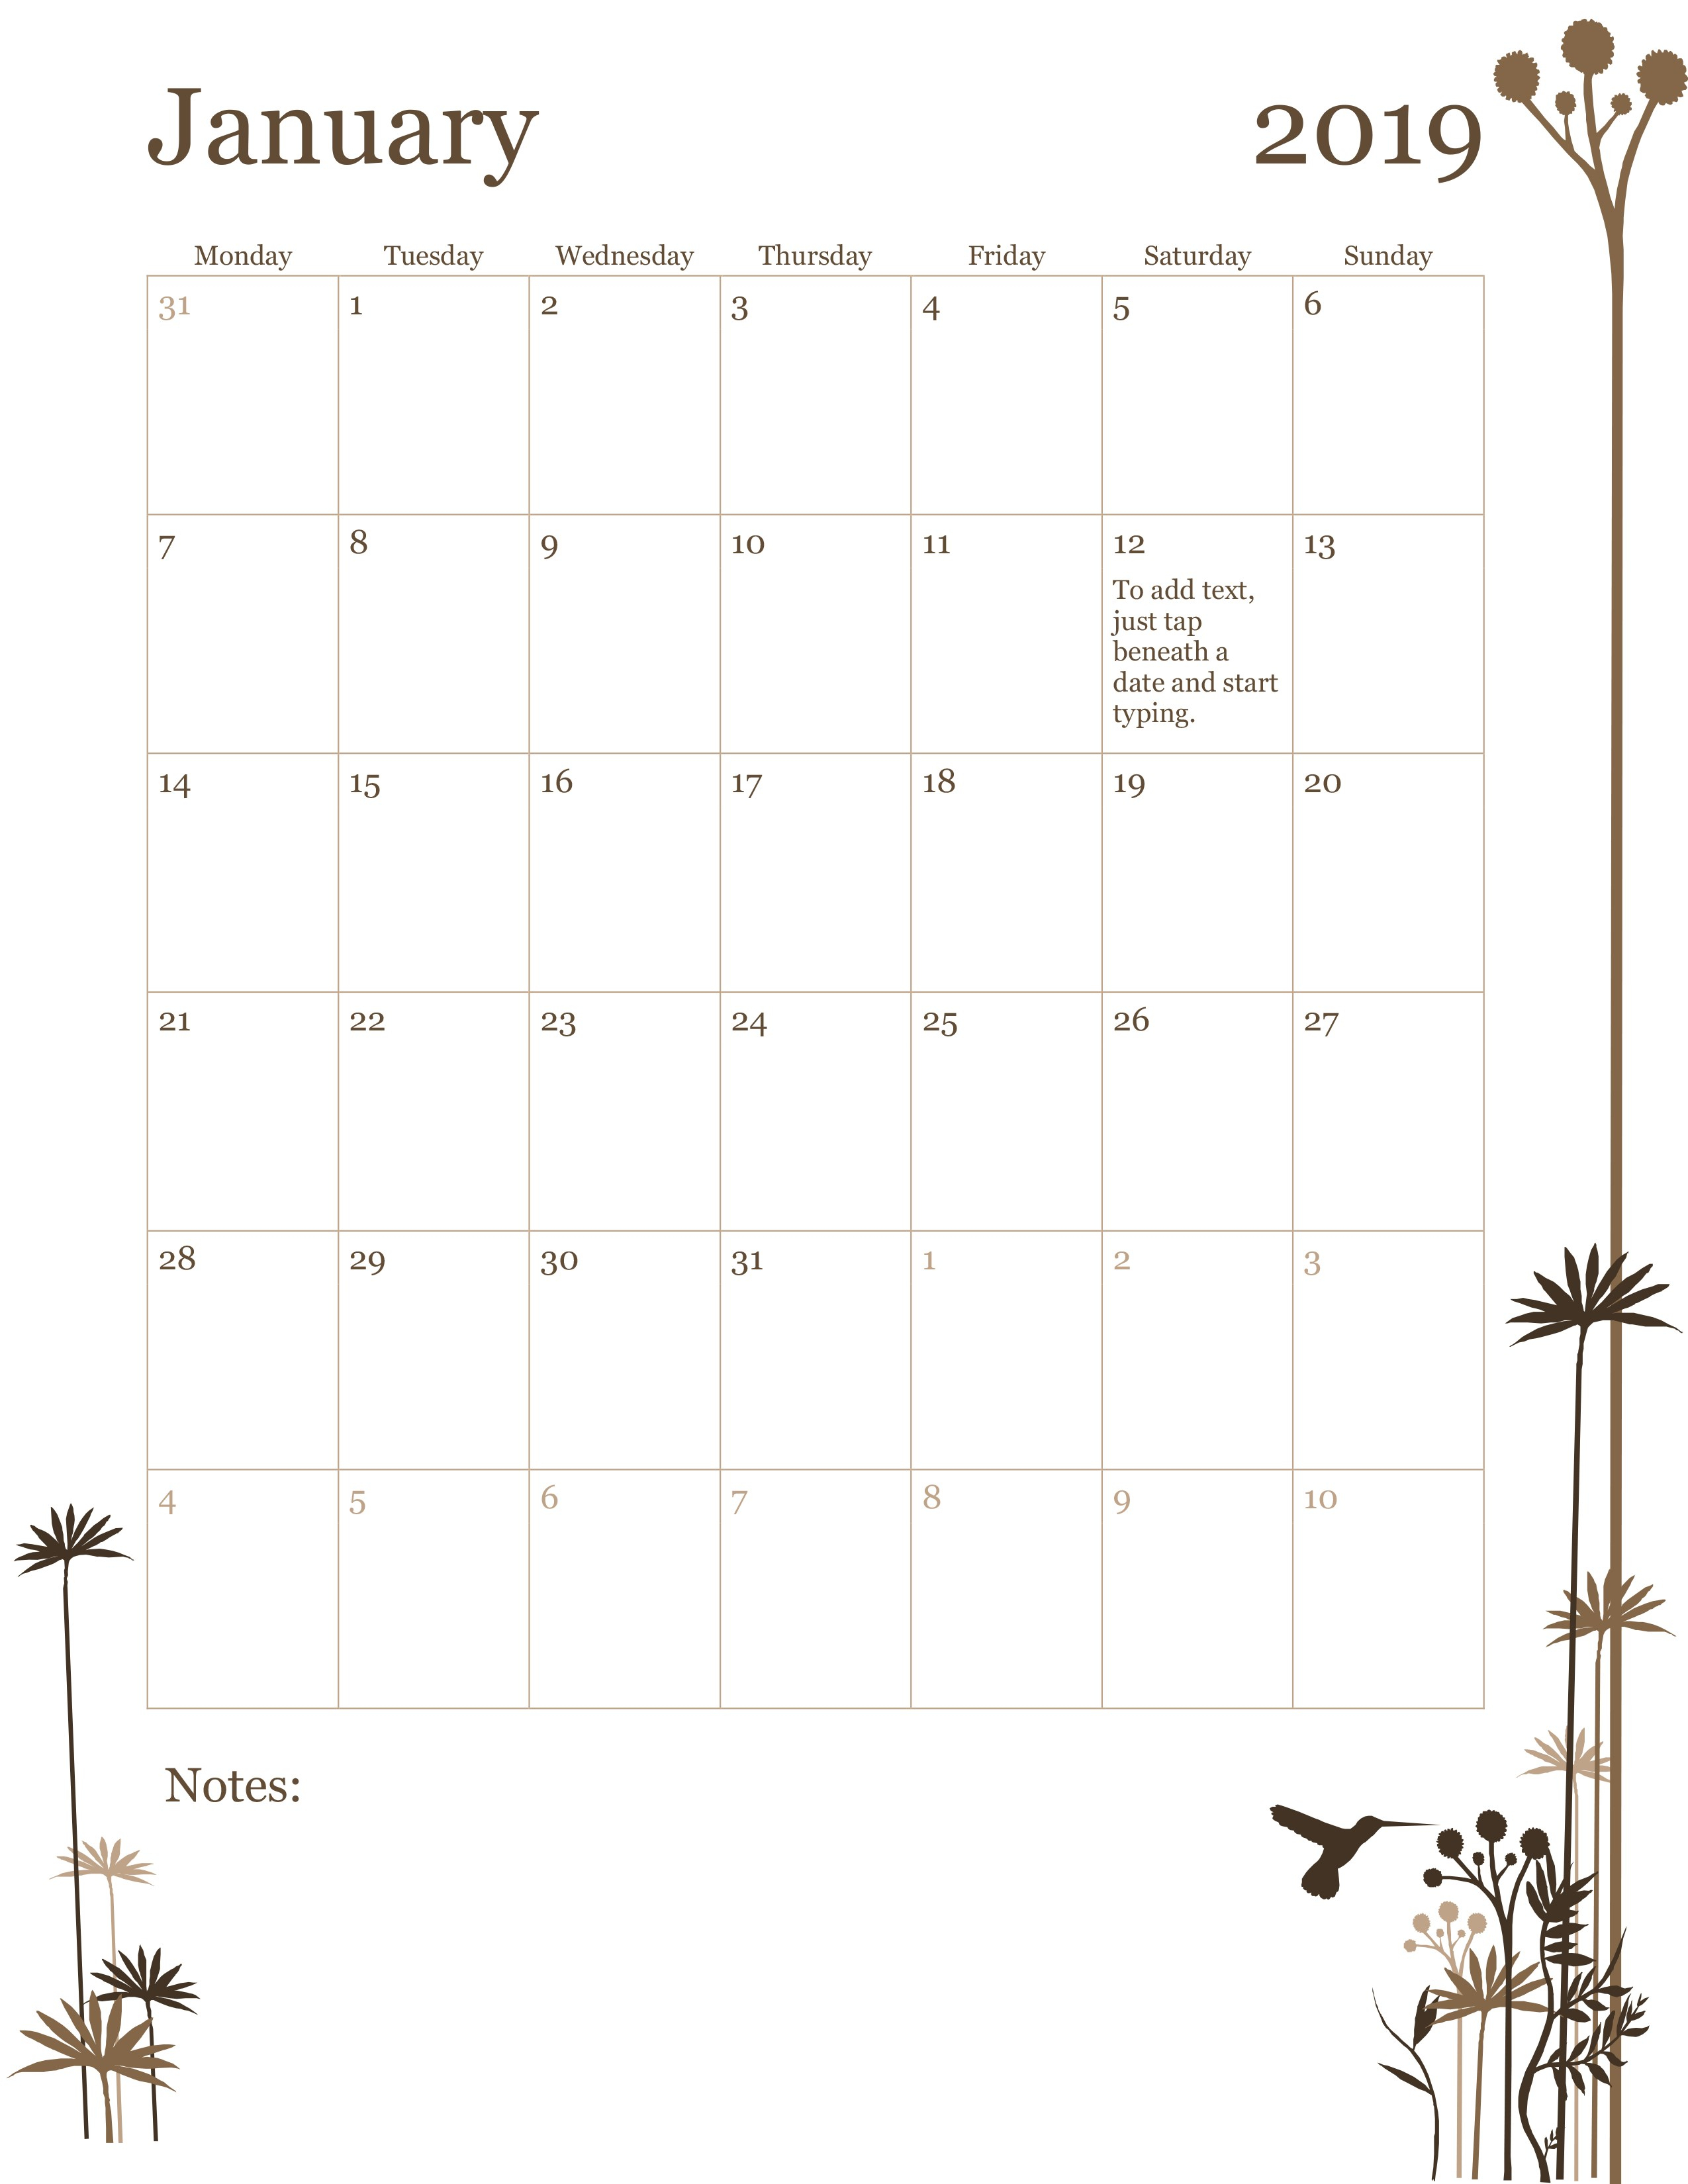 Calendars - Office